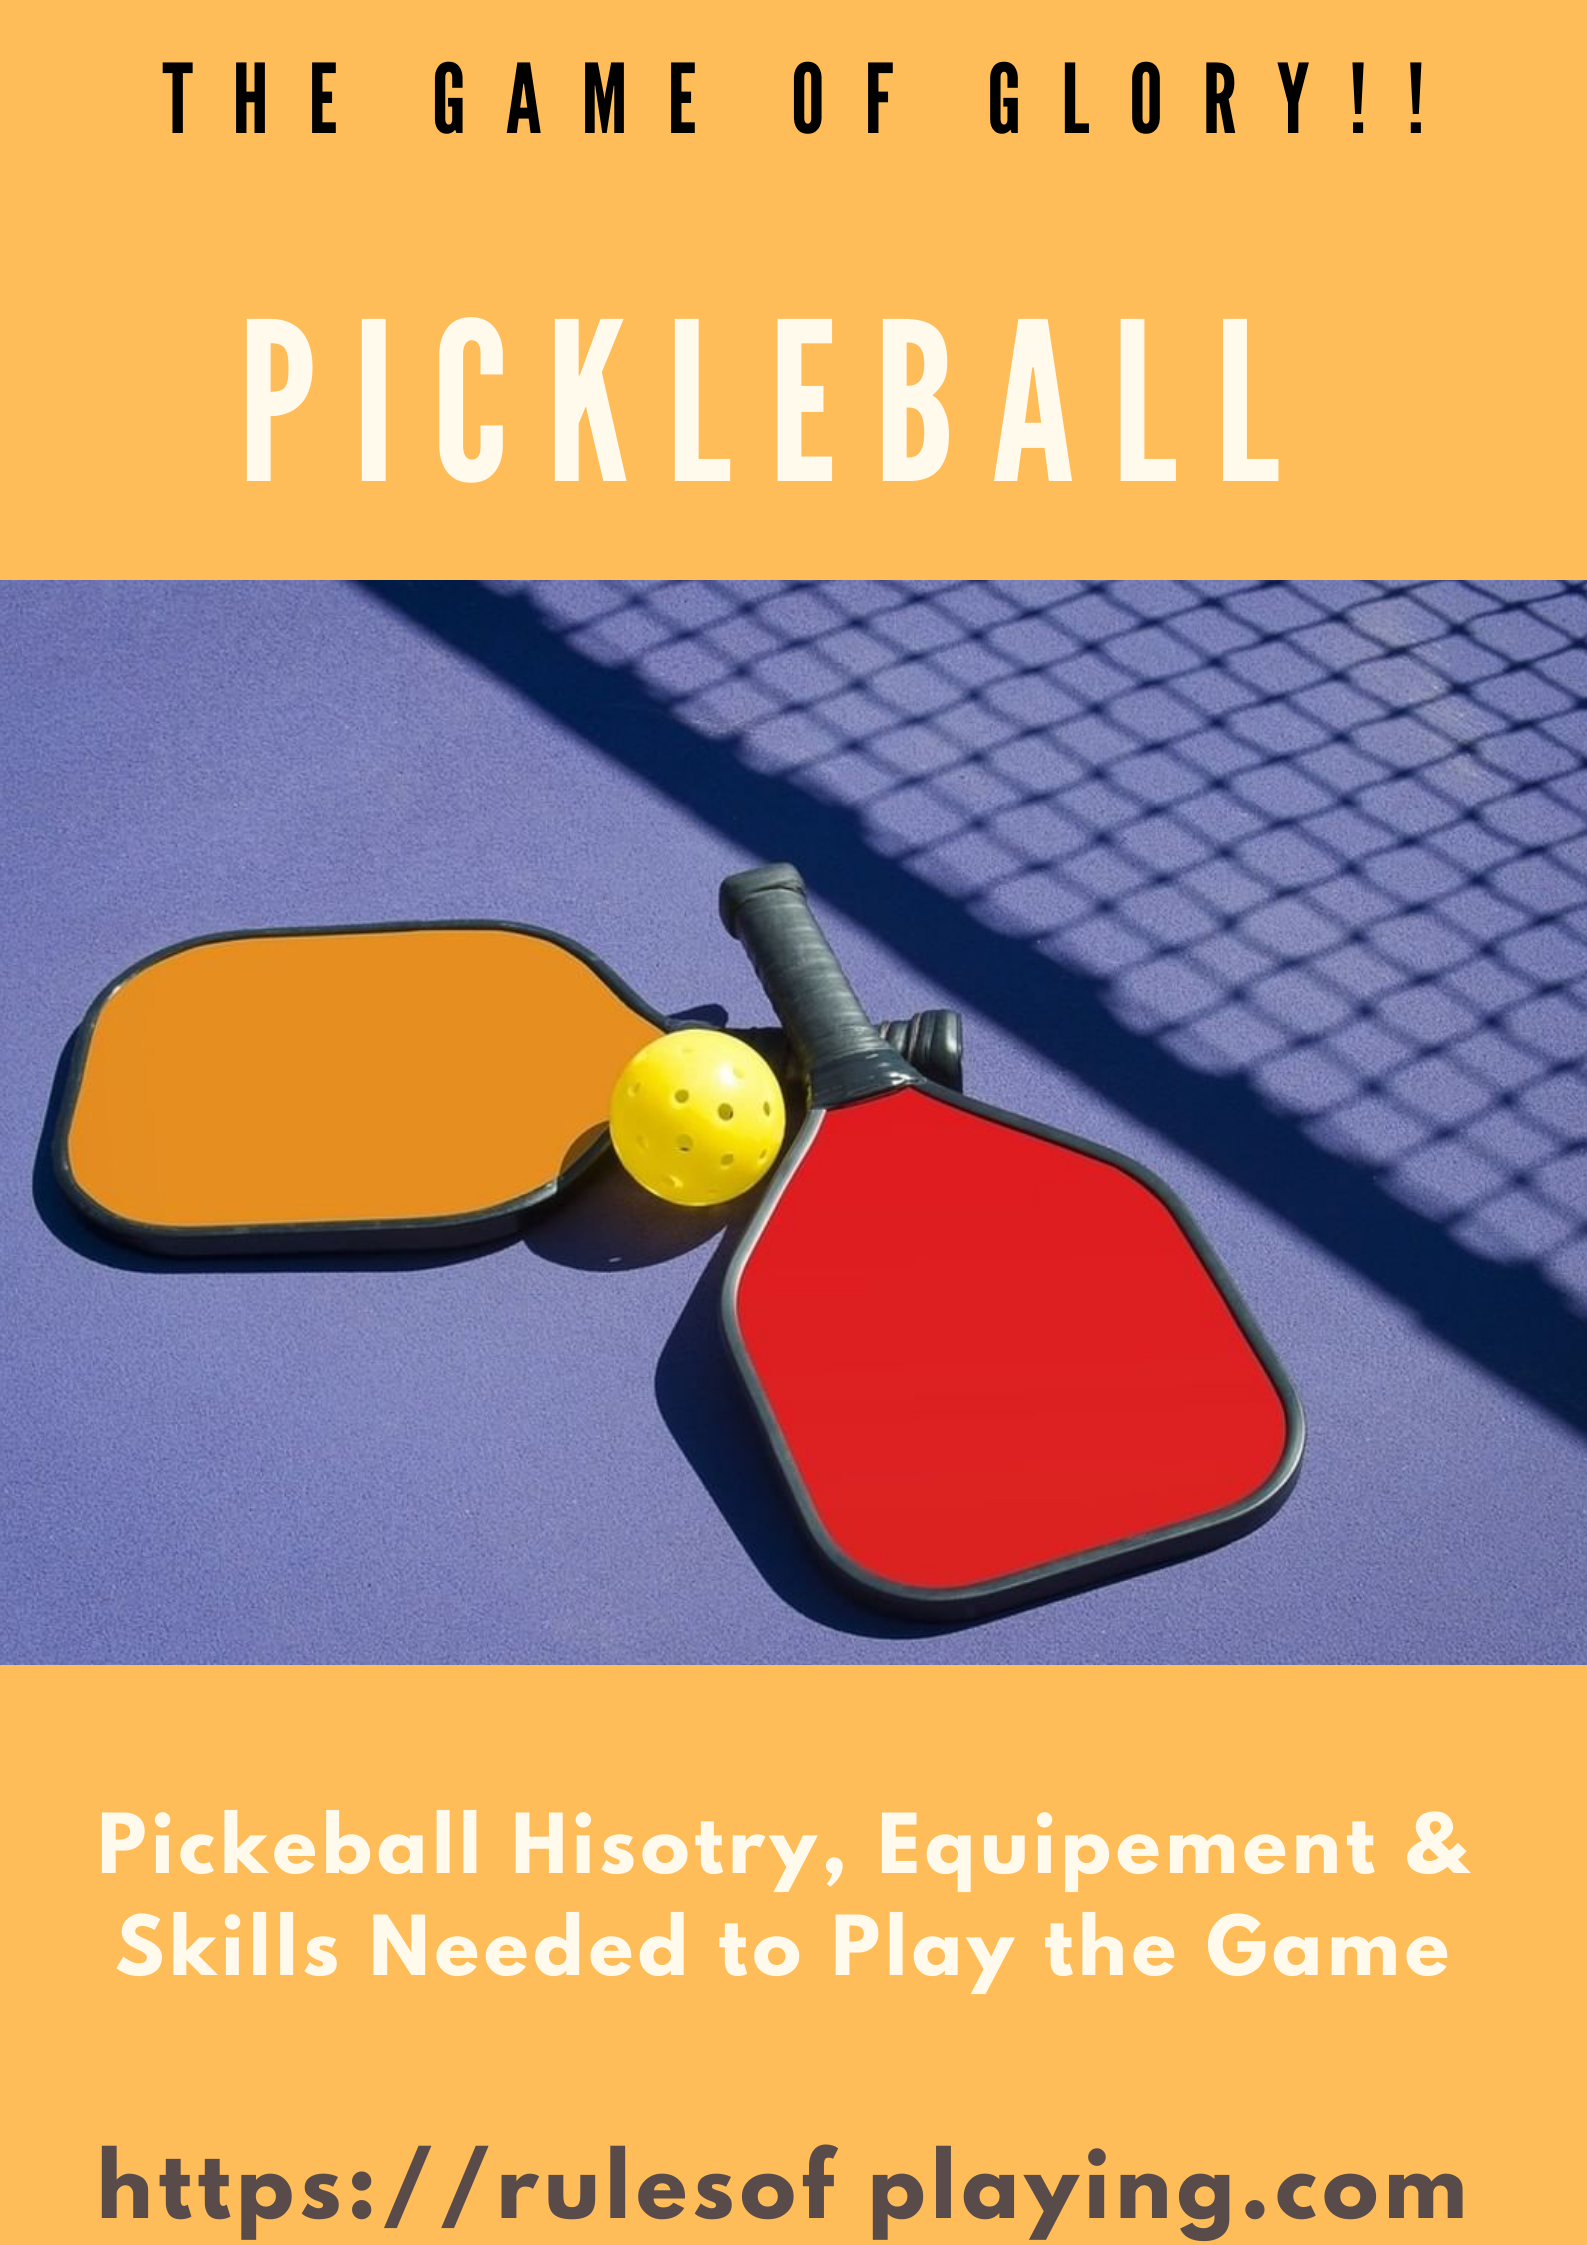 Pickleball History & Equipment